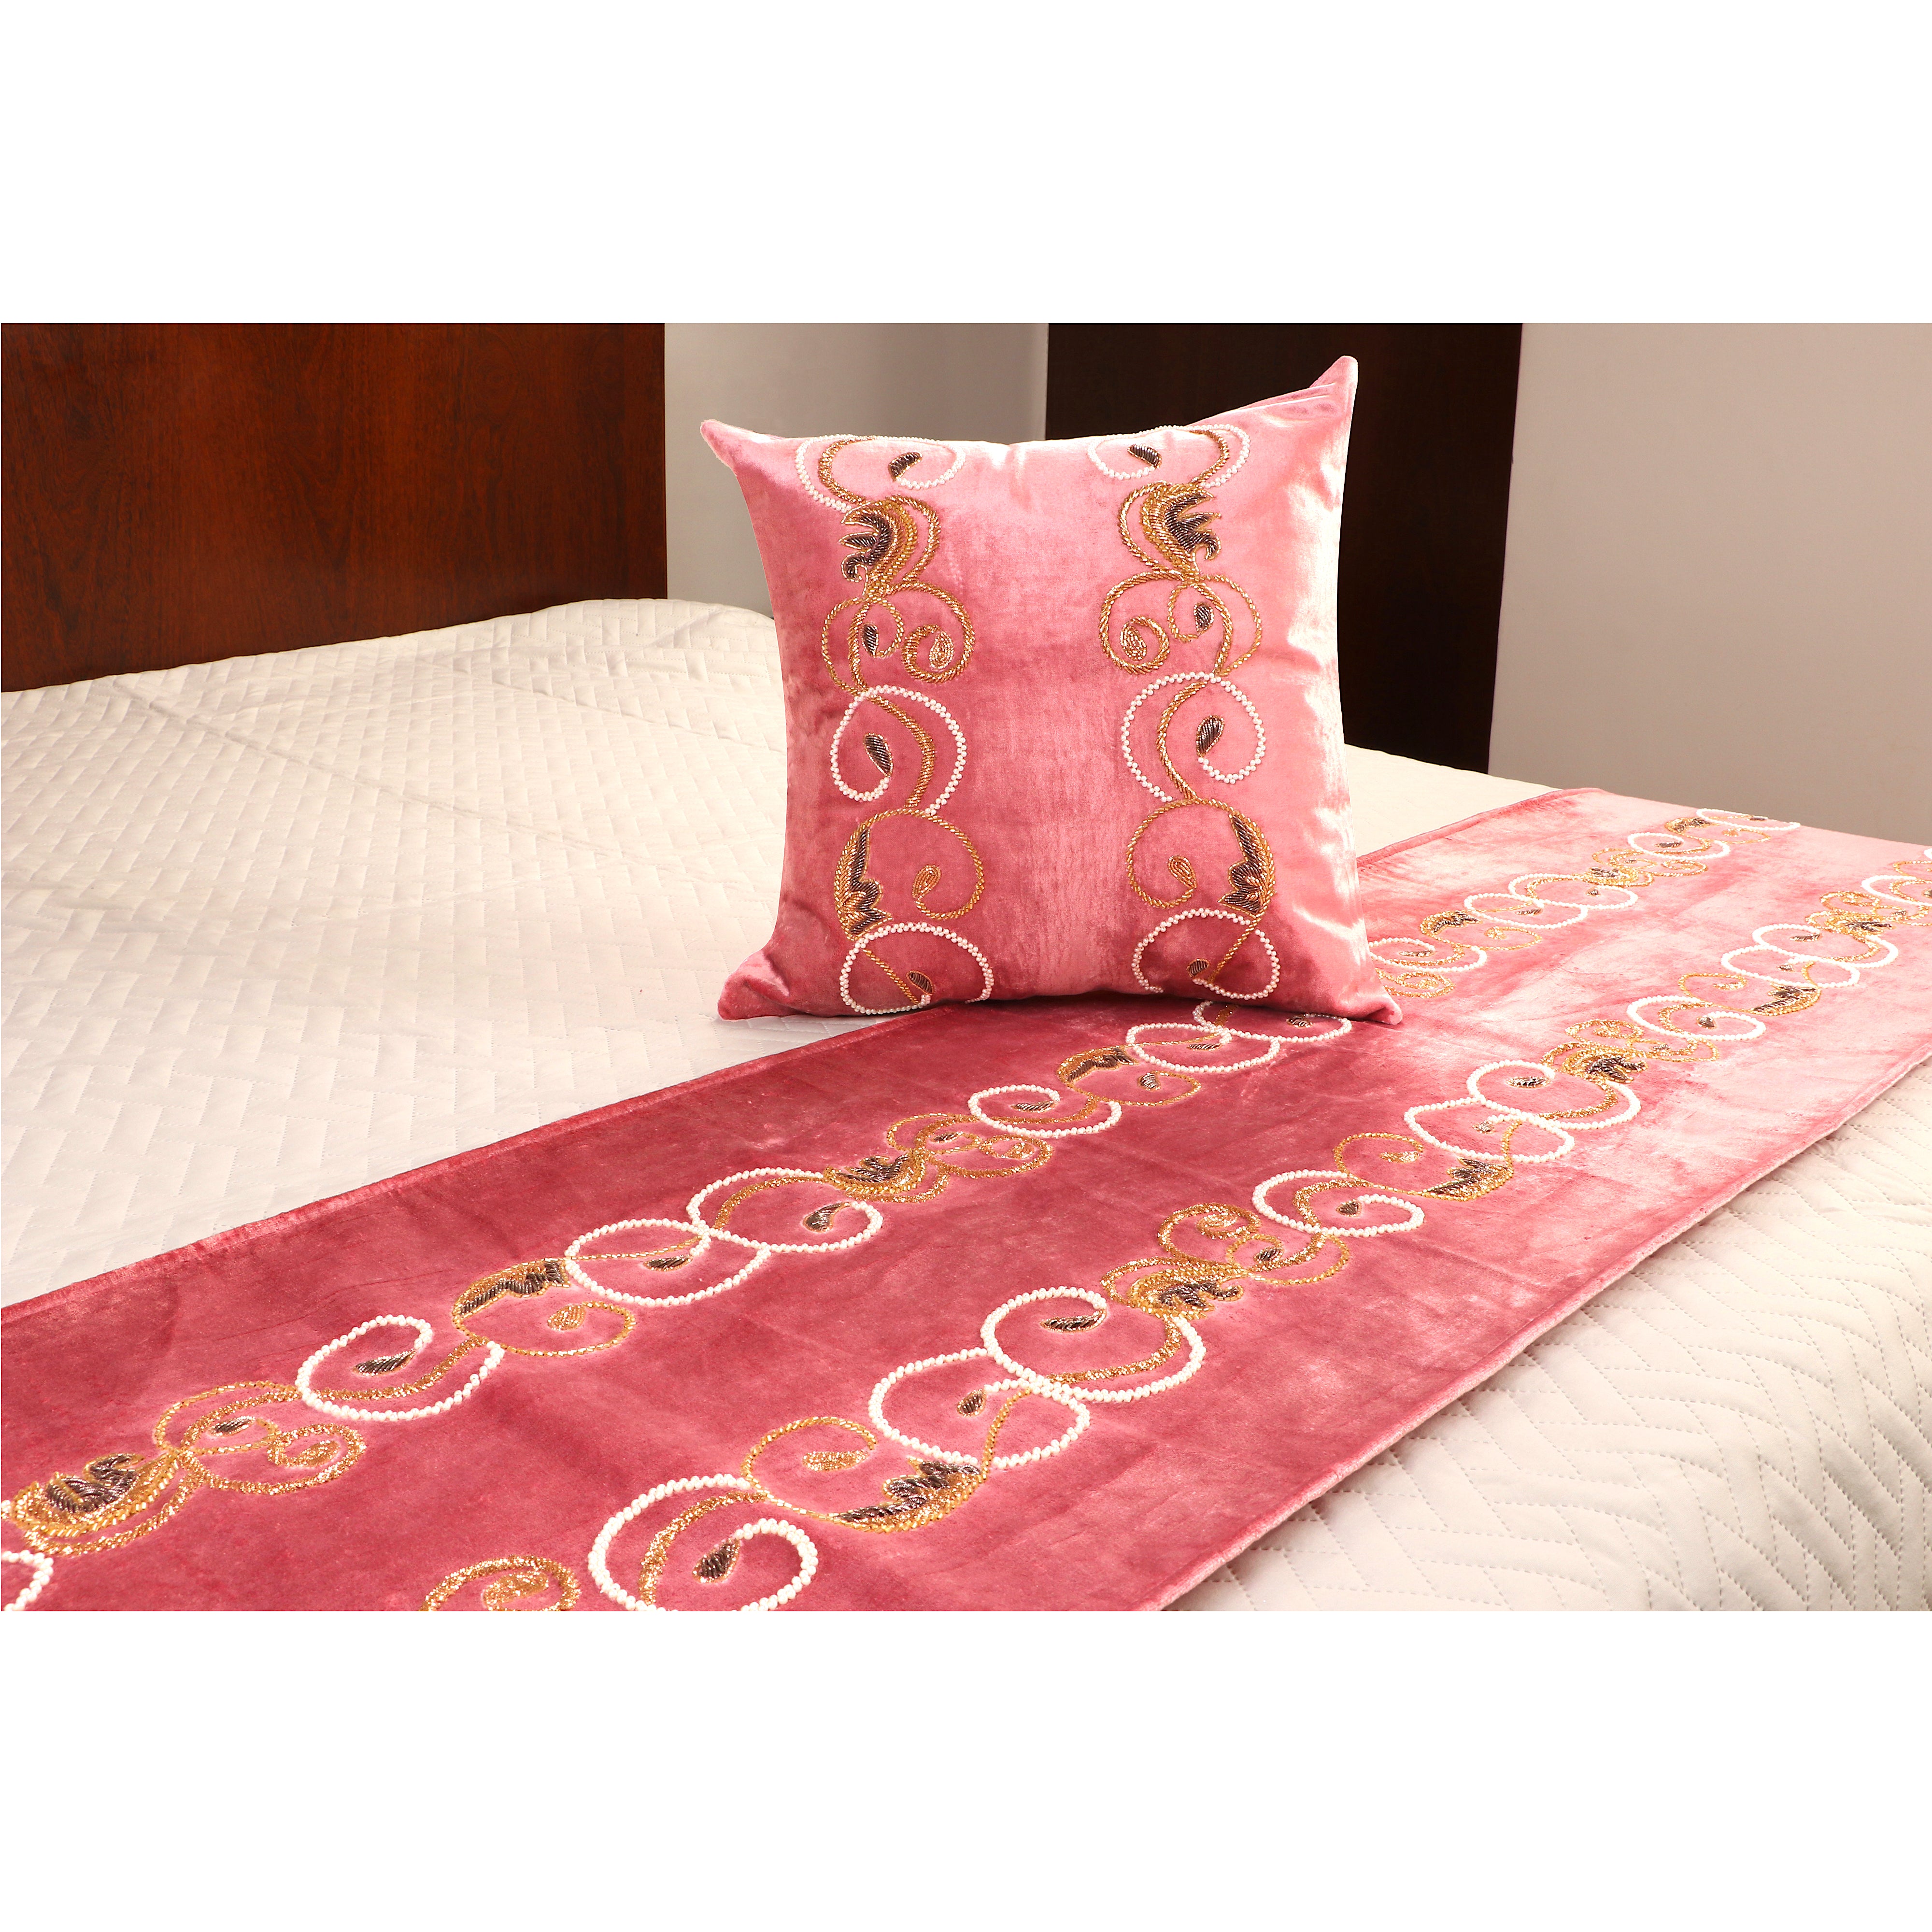 Autumn Swirl -Rose pink Velvet Bed runner With Matching Decorative Throw Pillows Handbeaded in swirl leaf pattern